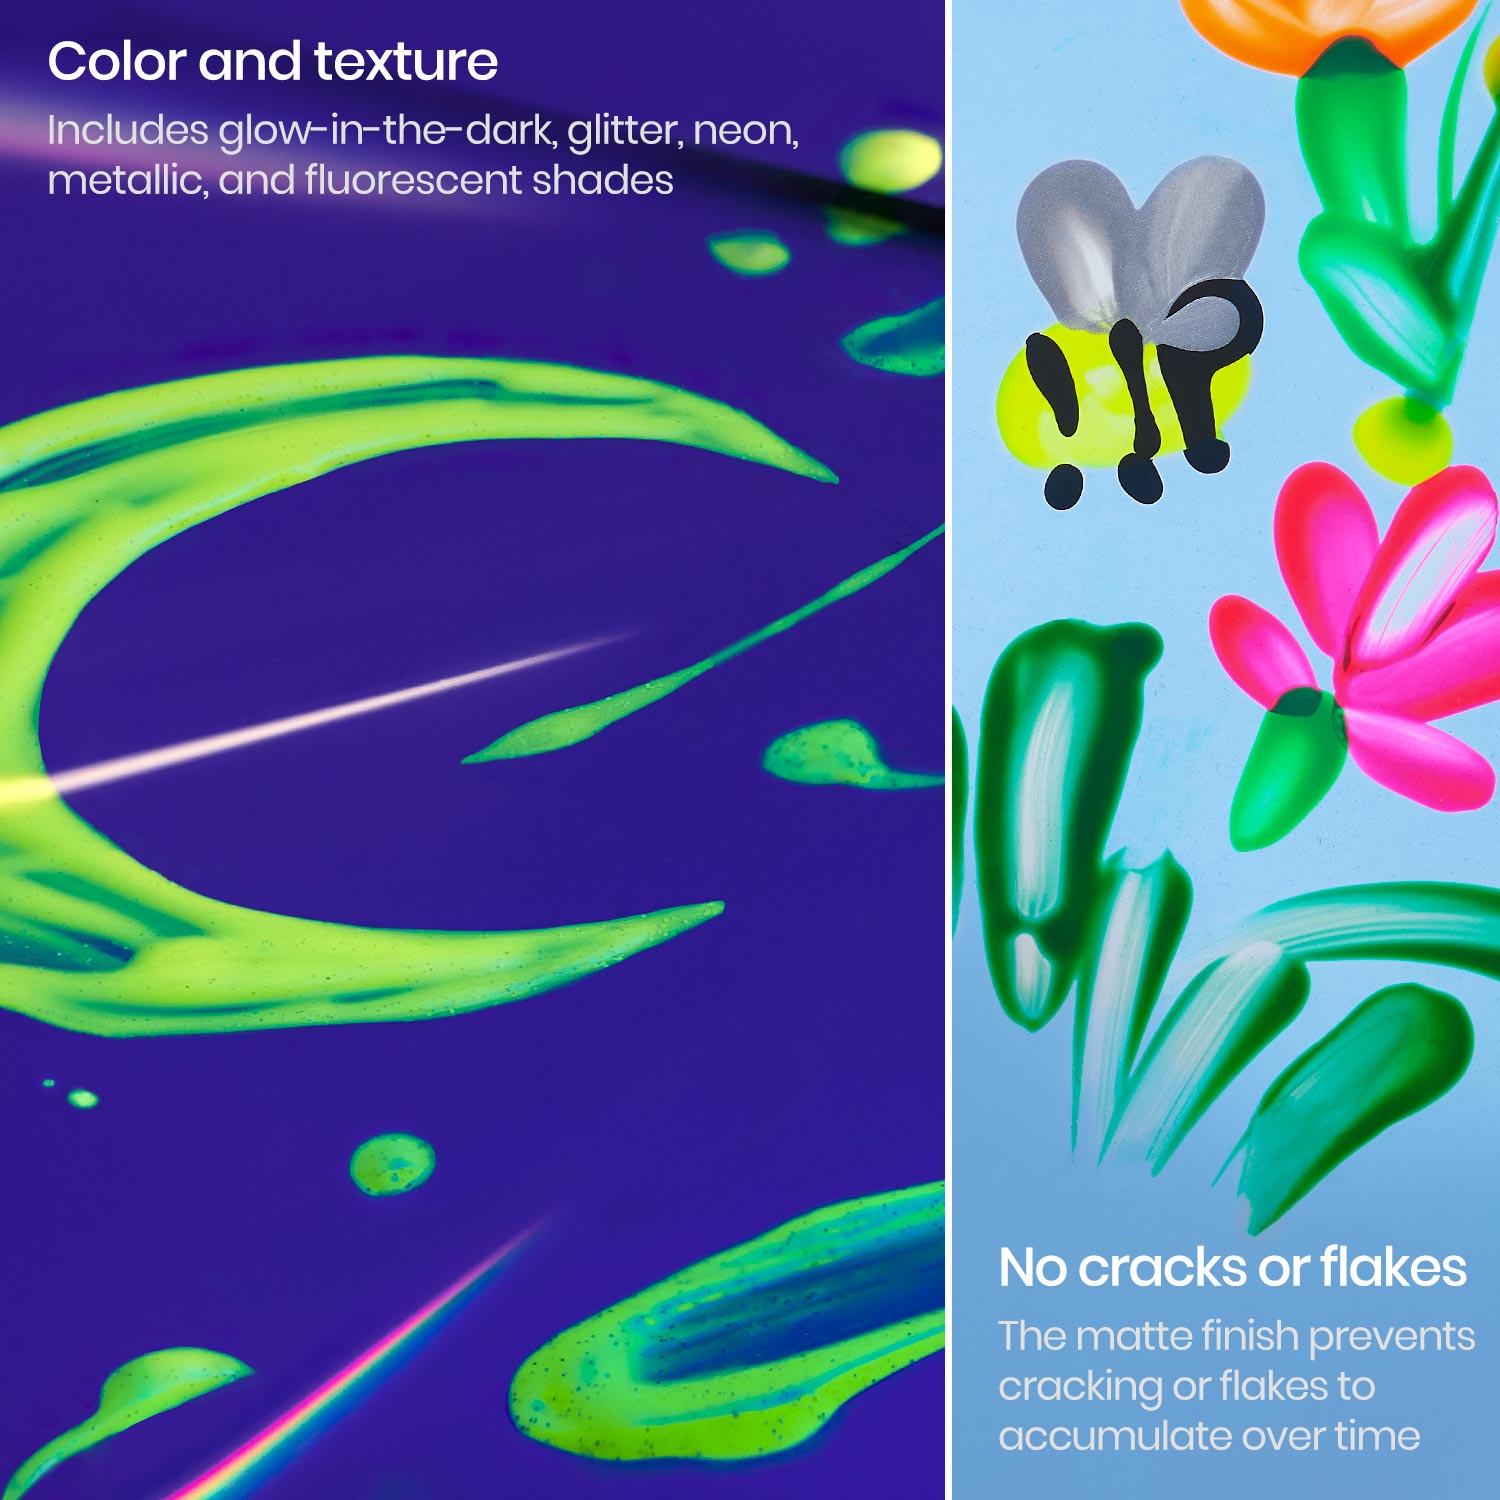 Art-time Washable Fluorescent Tempera Paint Kit 6 Fluorescent